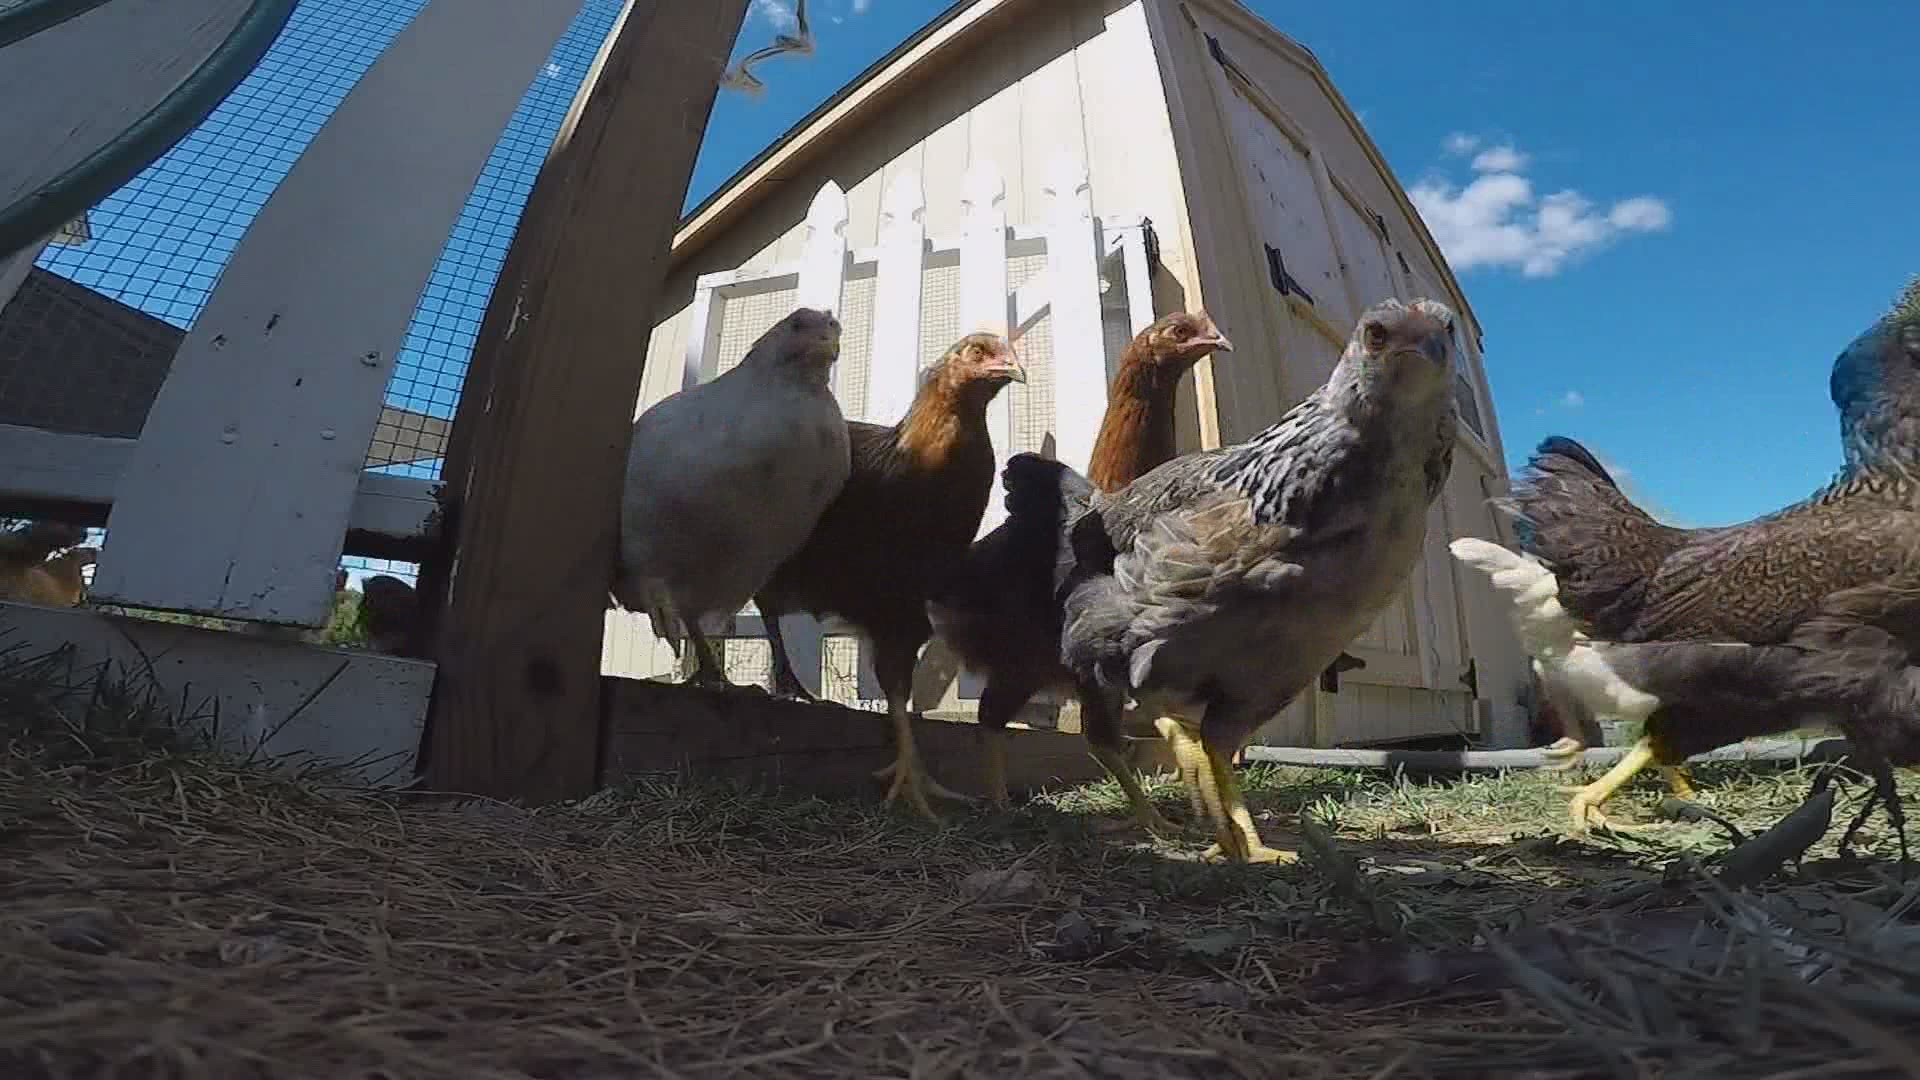 Thousands of chicks arrive dead to Maine farmers amid USPS turmoil